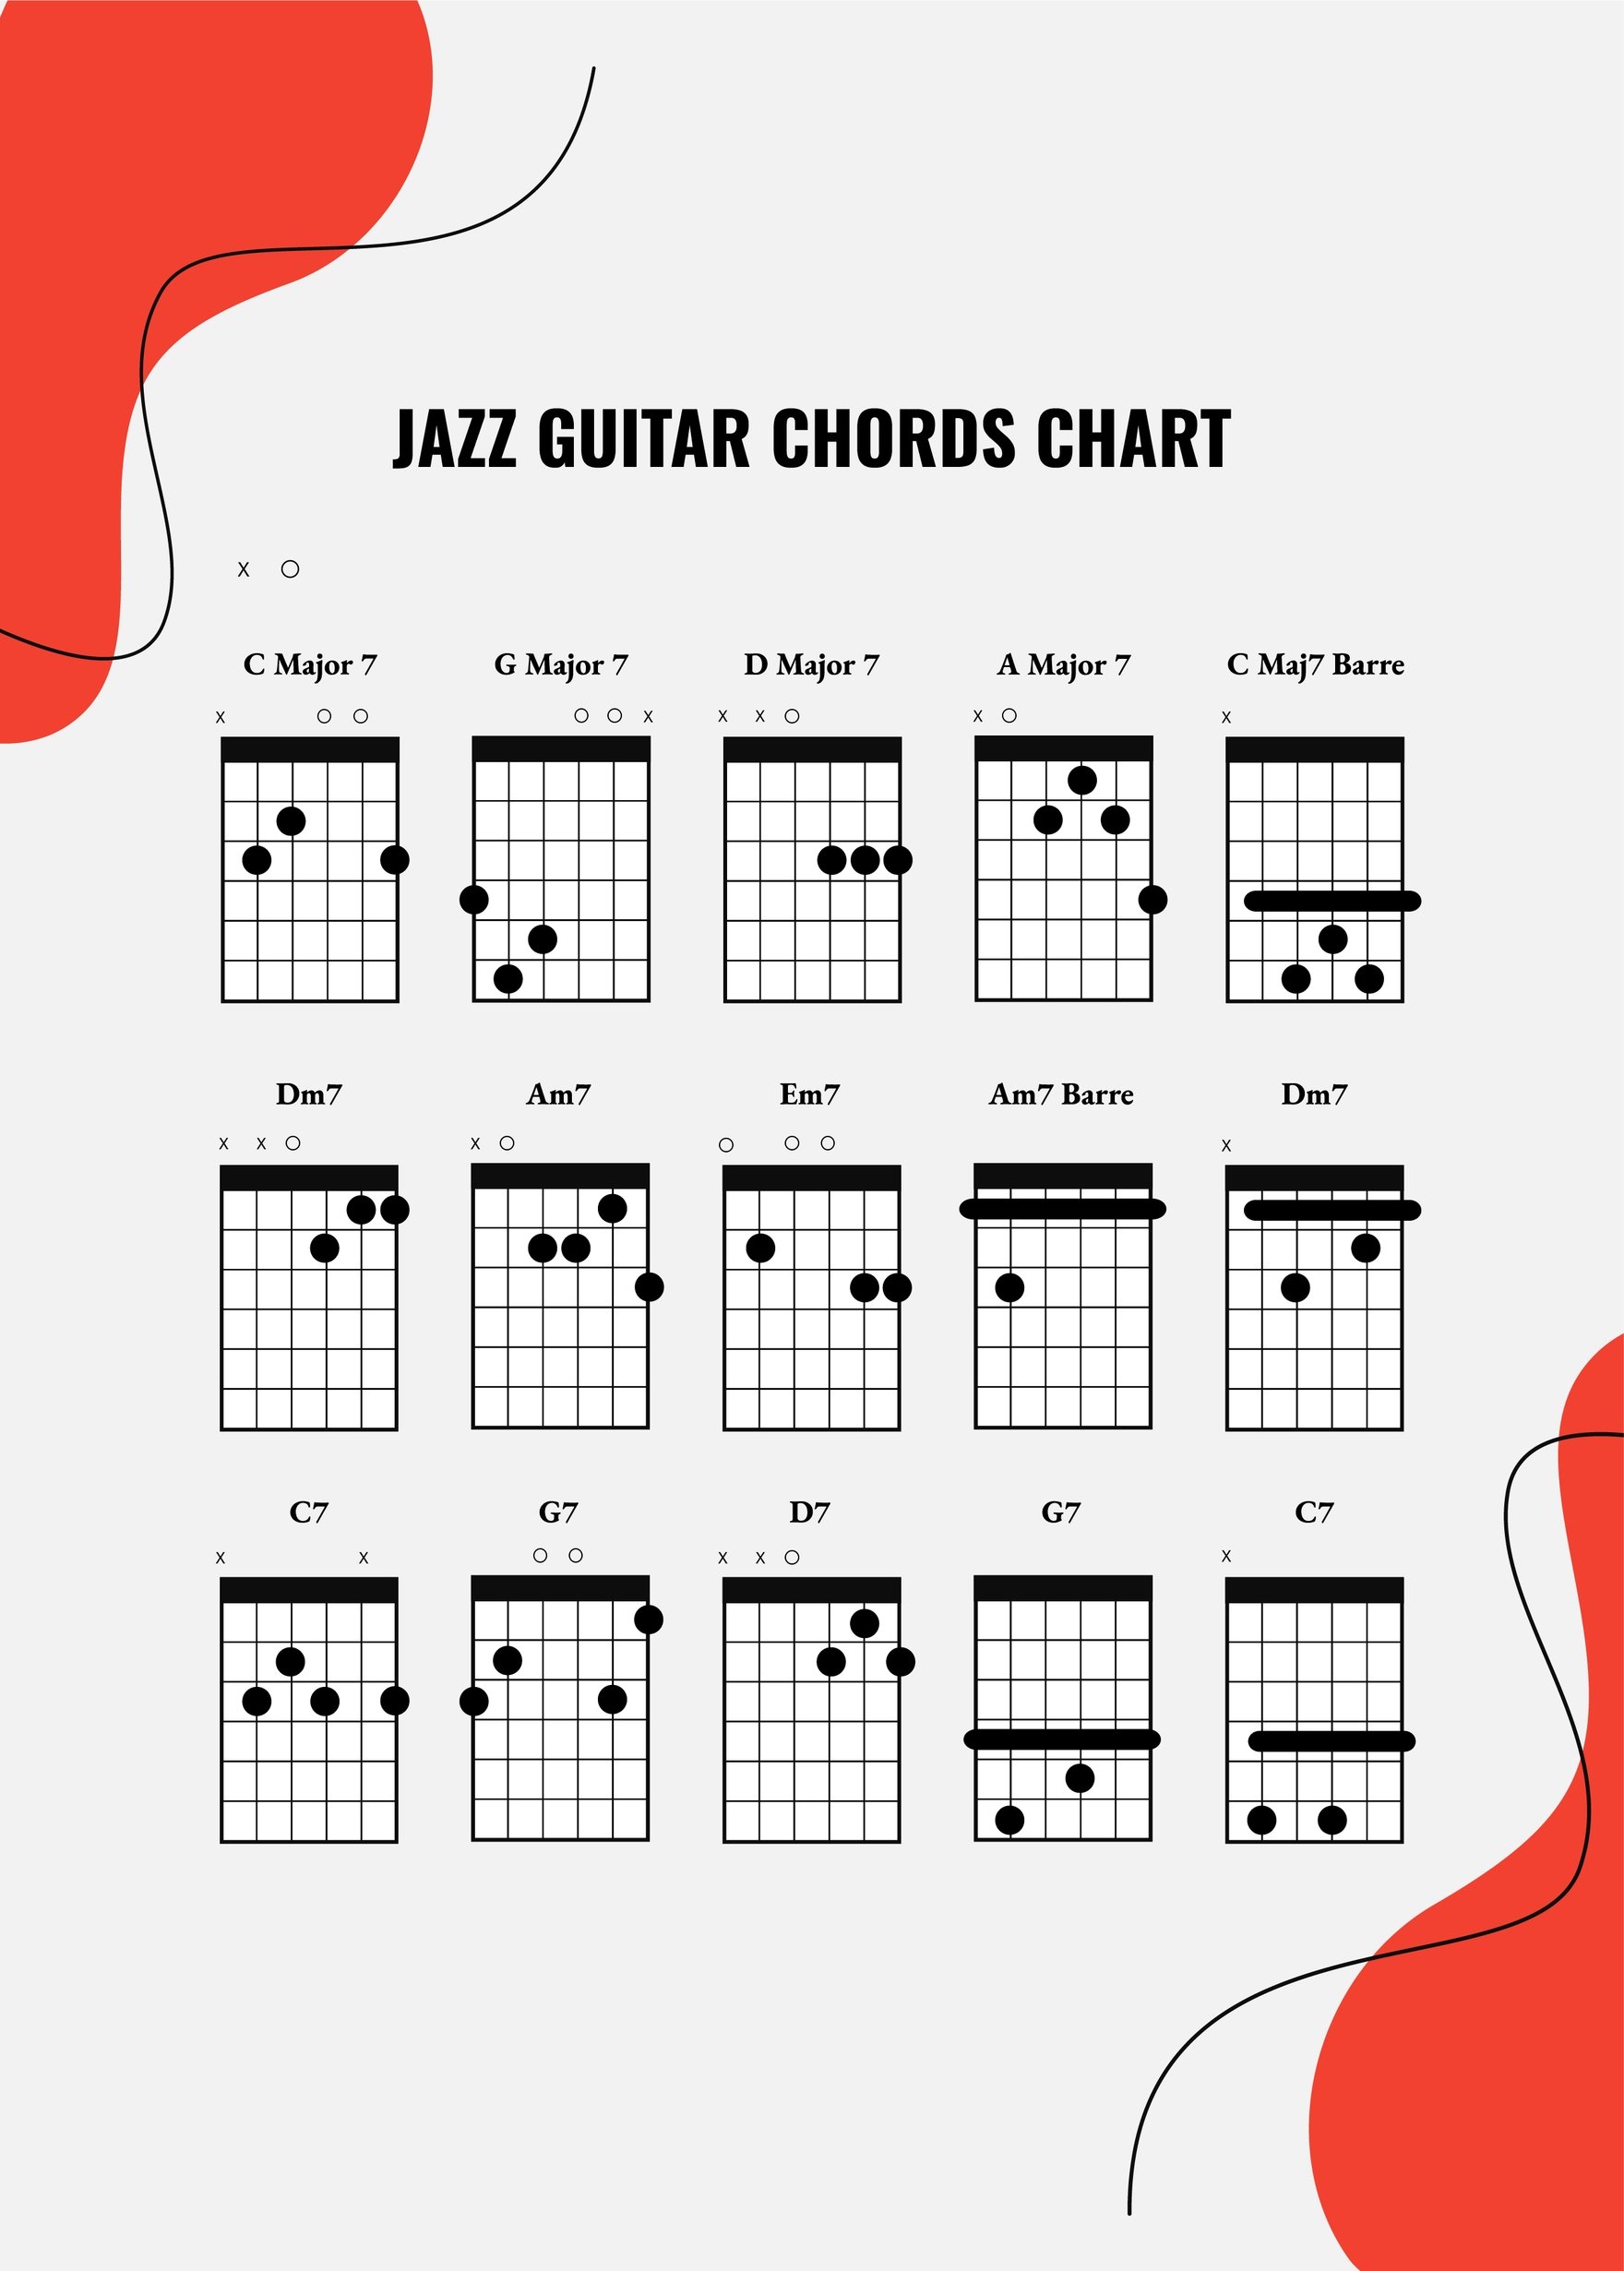 Jazz Guitar Chords Chart in PDF, Illustrator